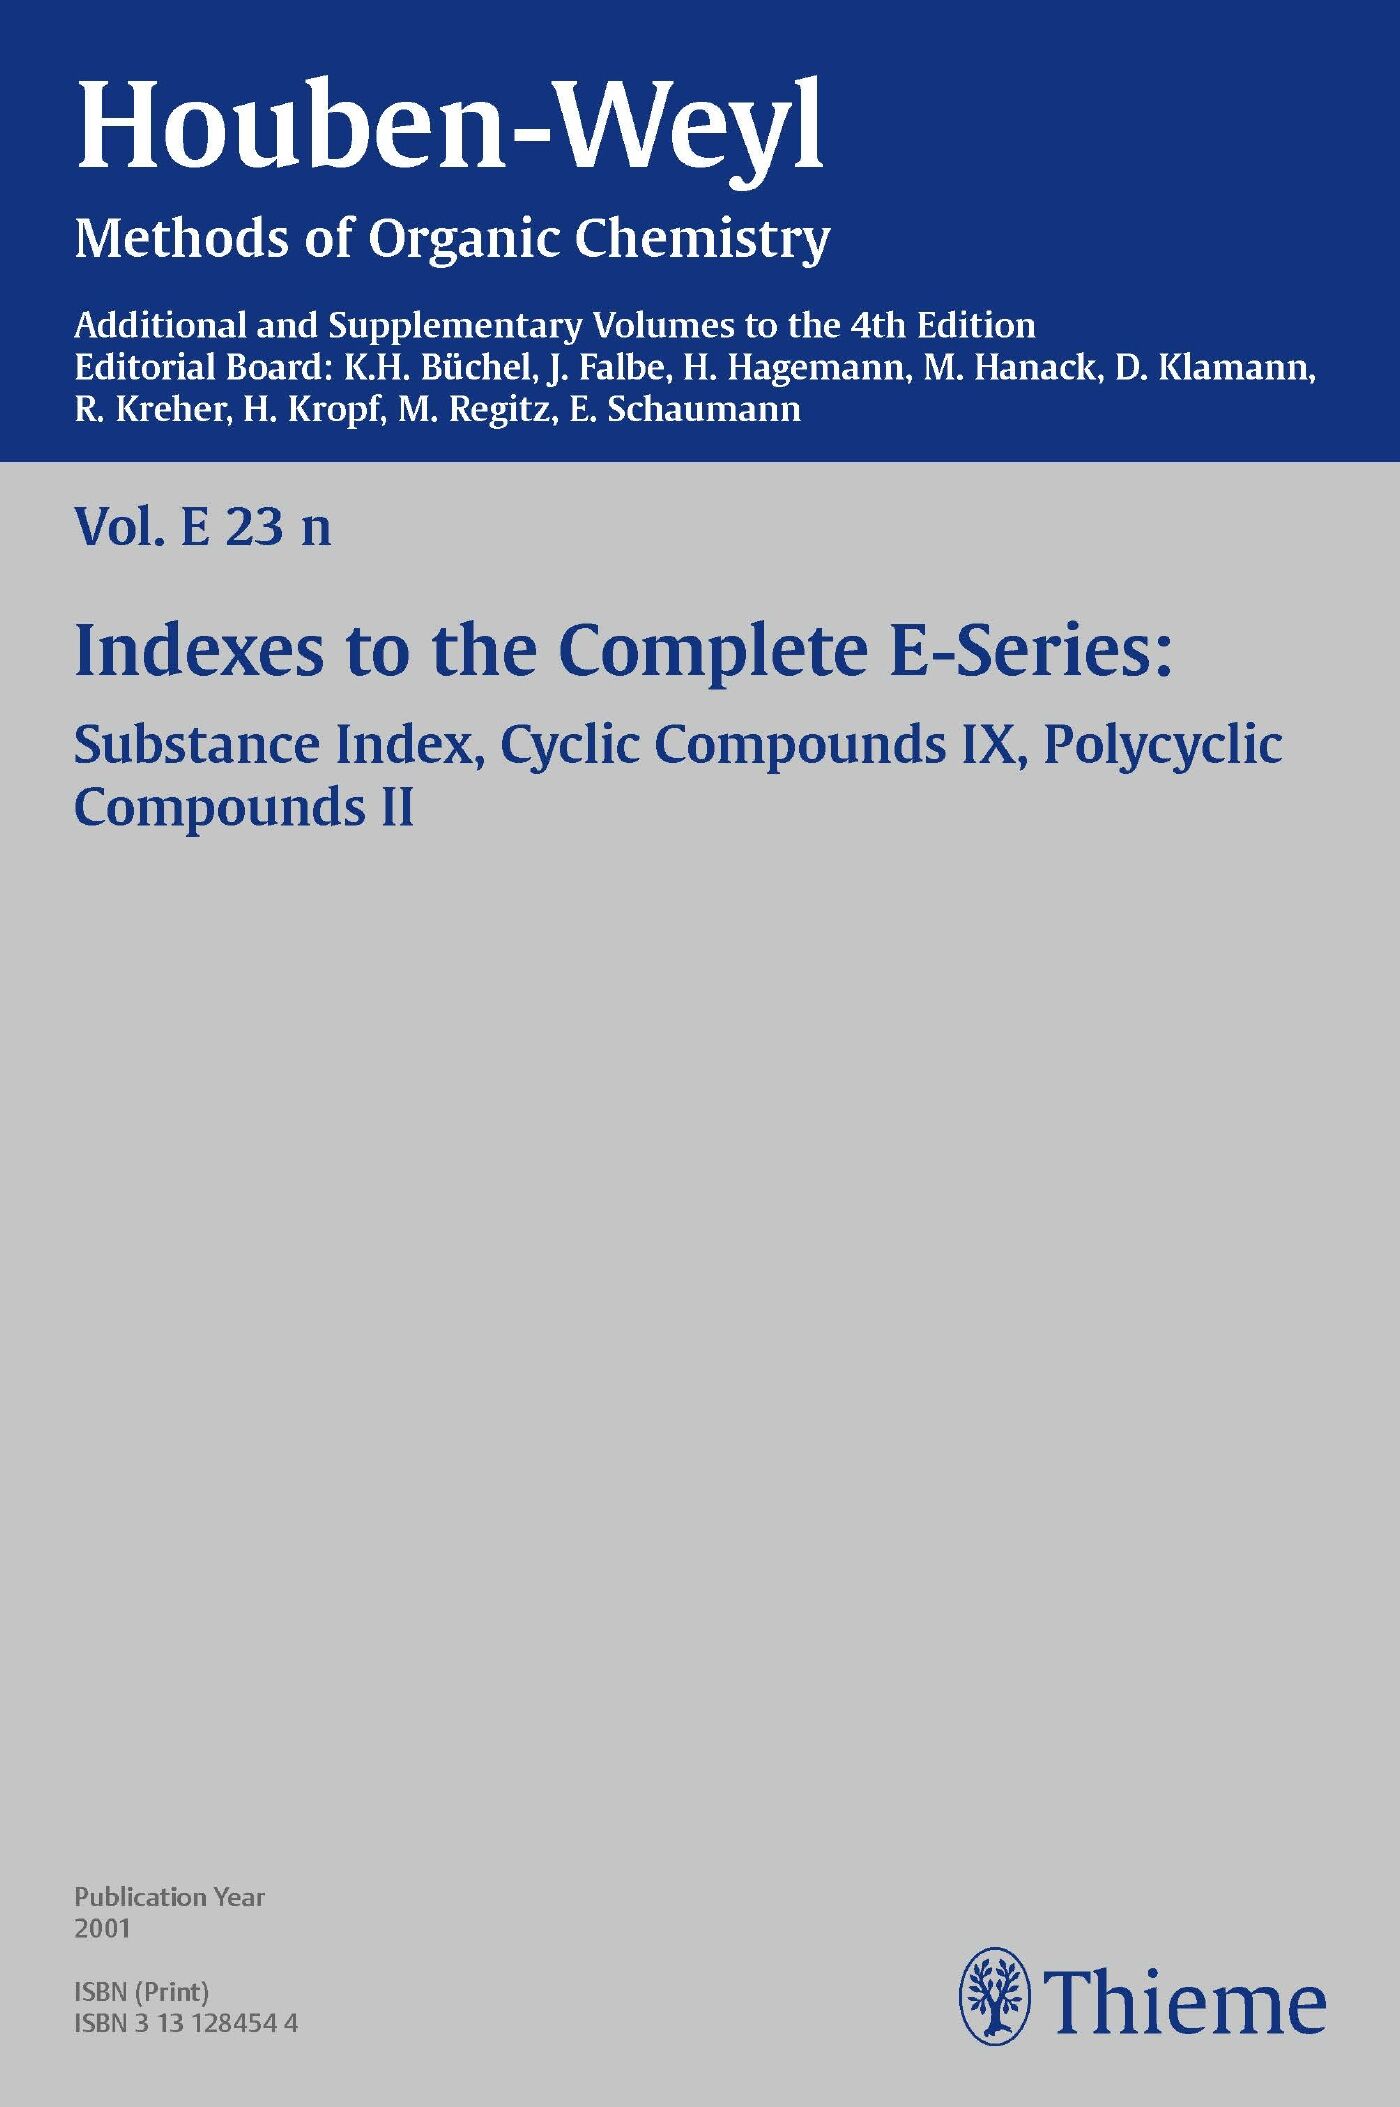 Houben-Weyl Methods of Organic Chemistry Vol. E 23n, 4th Edition Supplement, 9783131827548